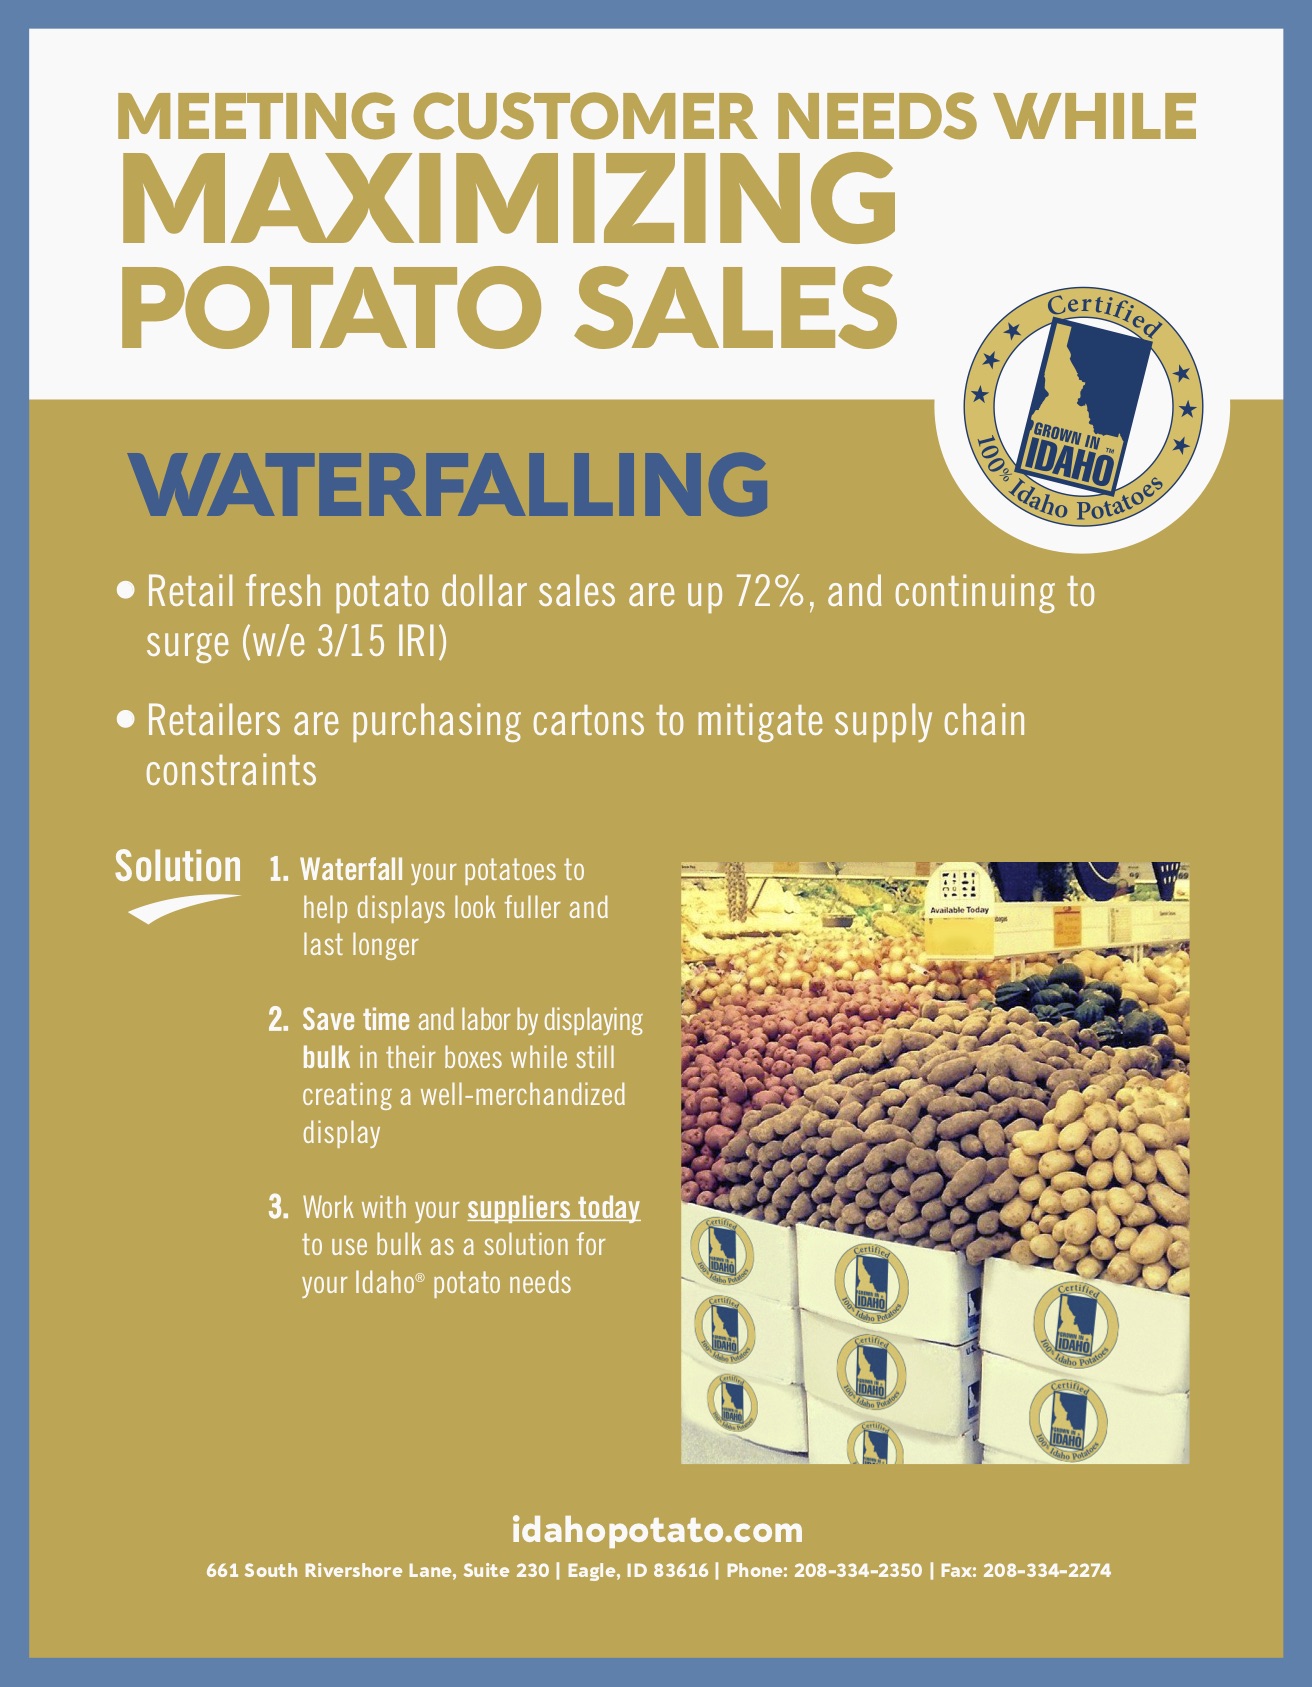 Maximizing Potato Sales